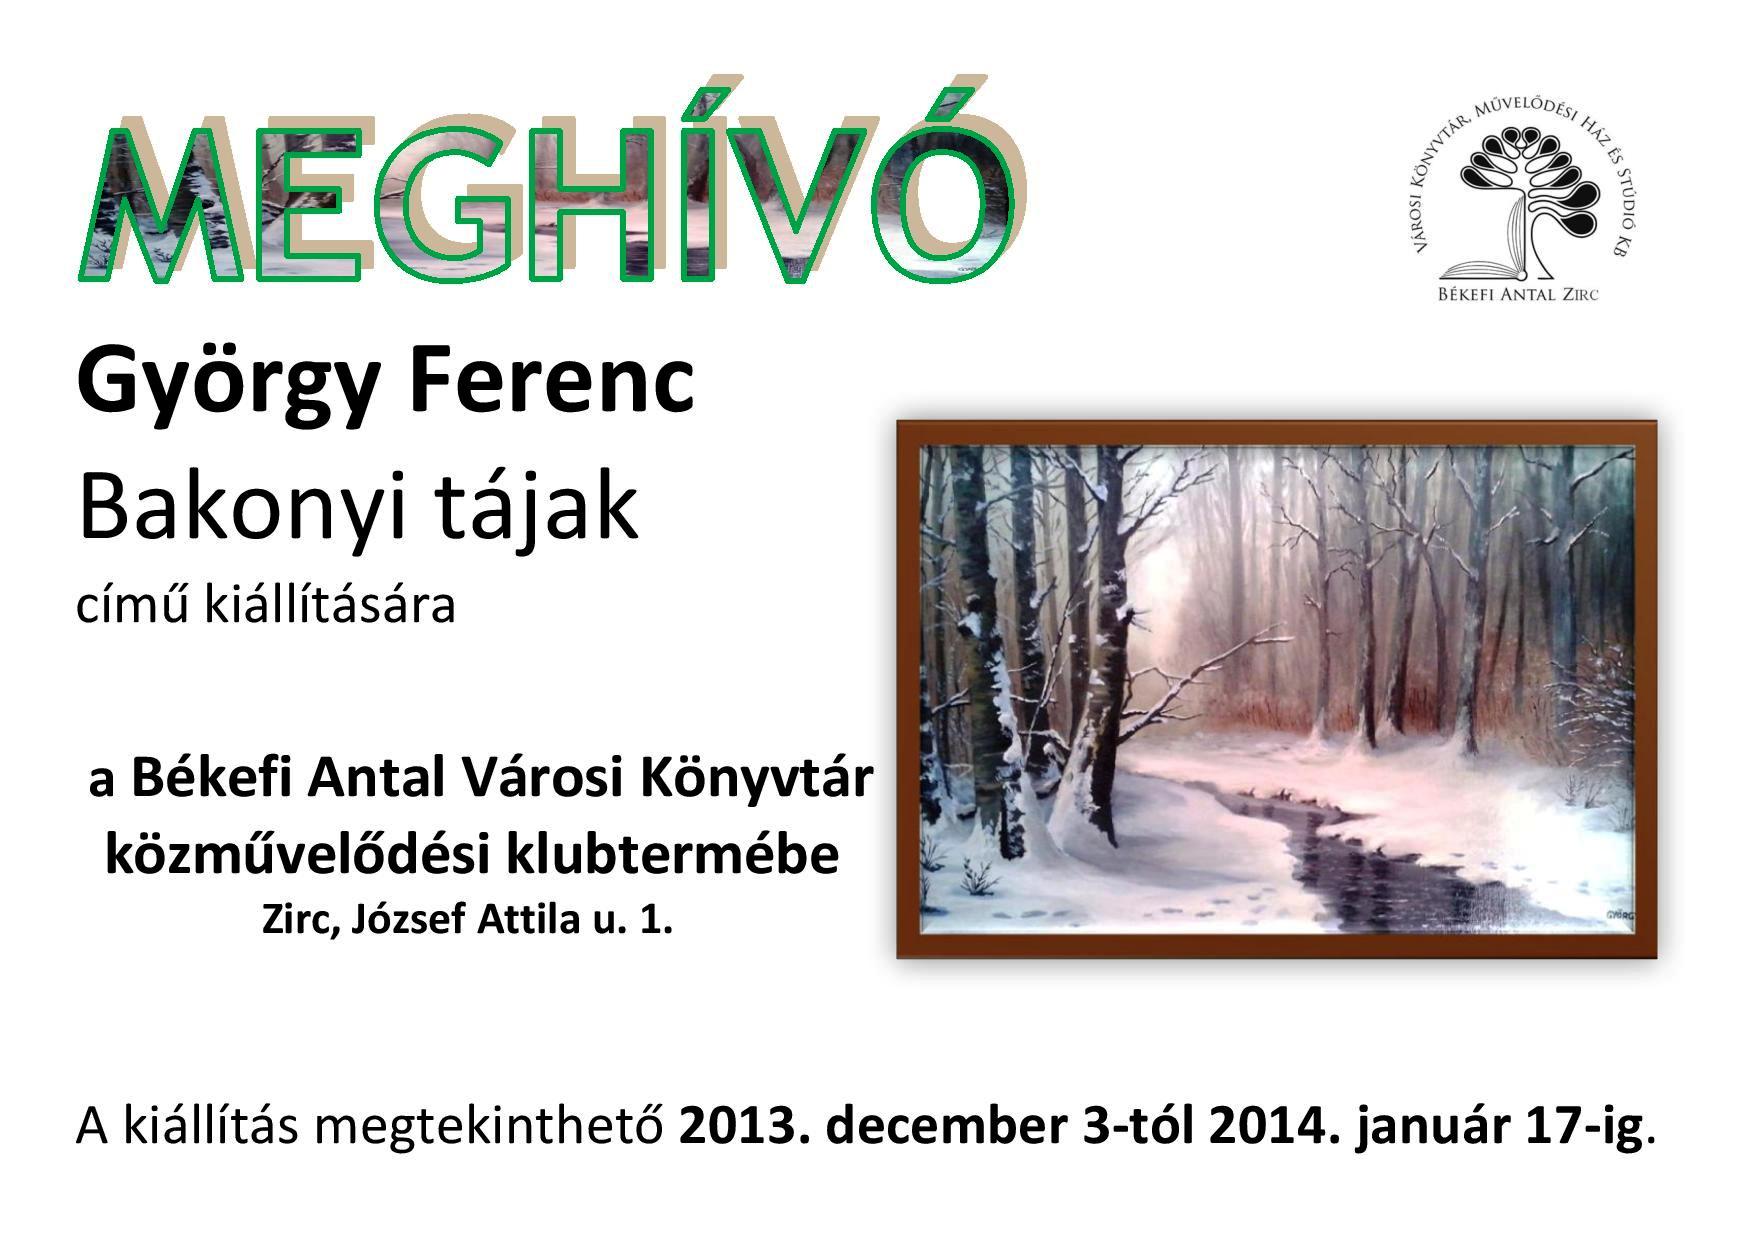 György Ferenc plakát-page-001 (1).jpg